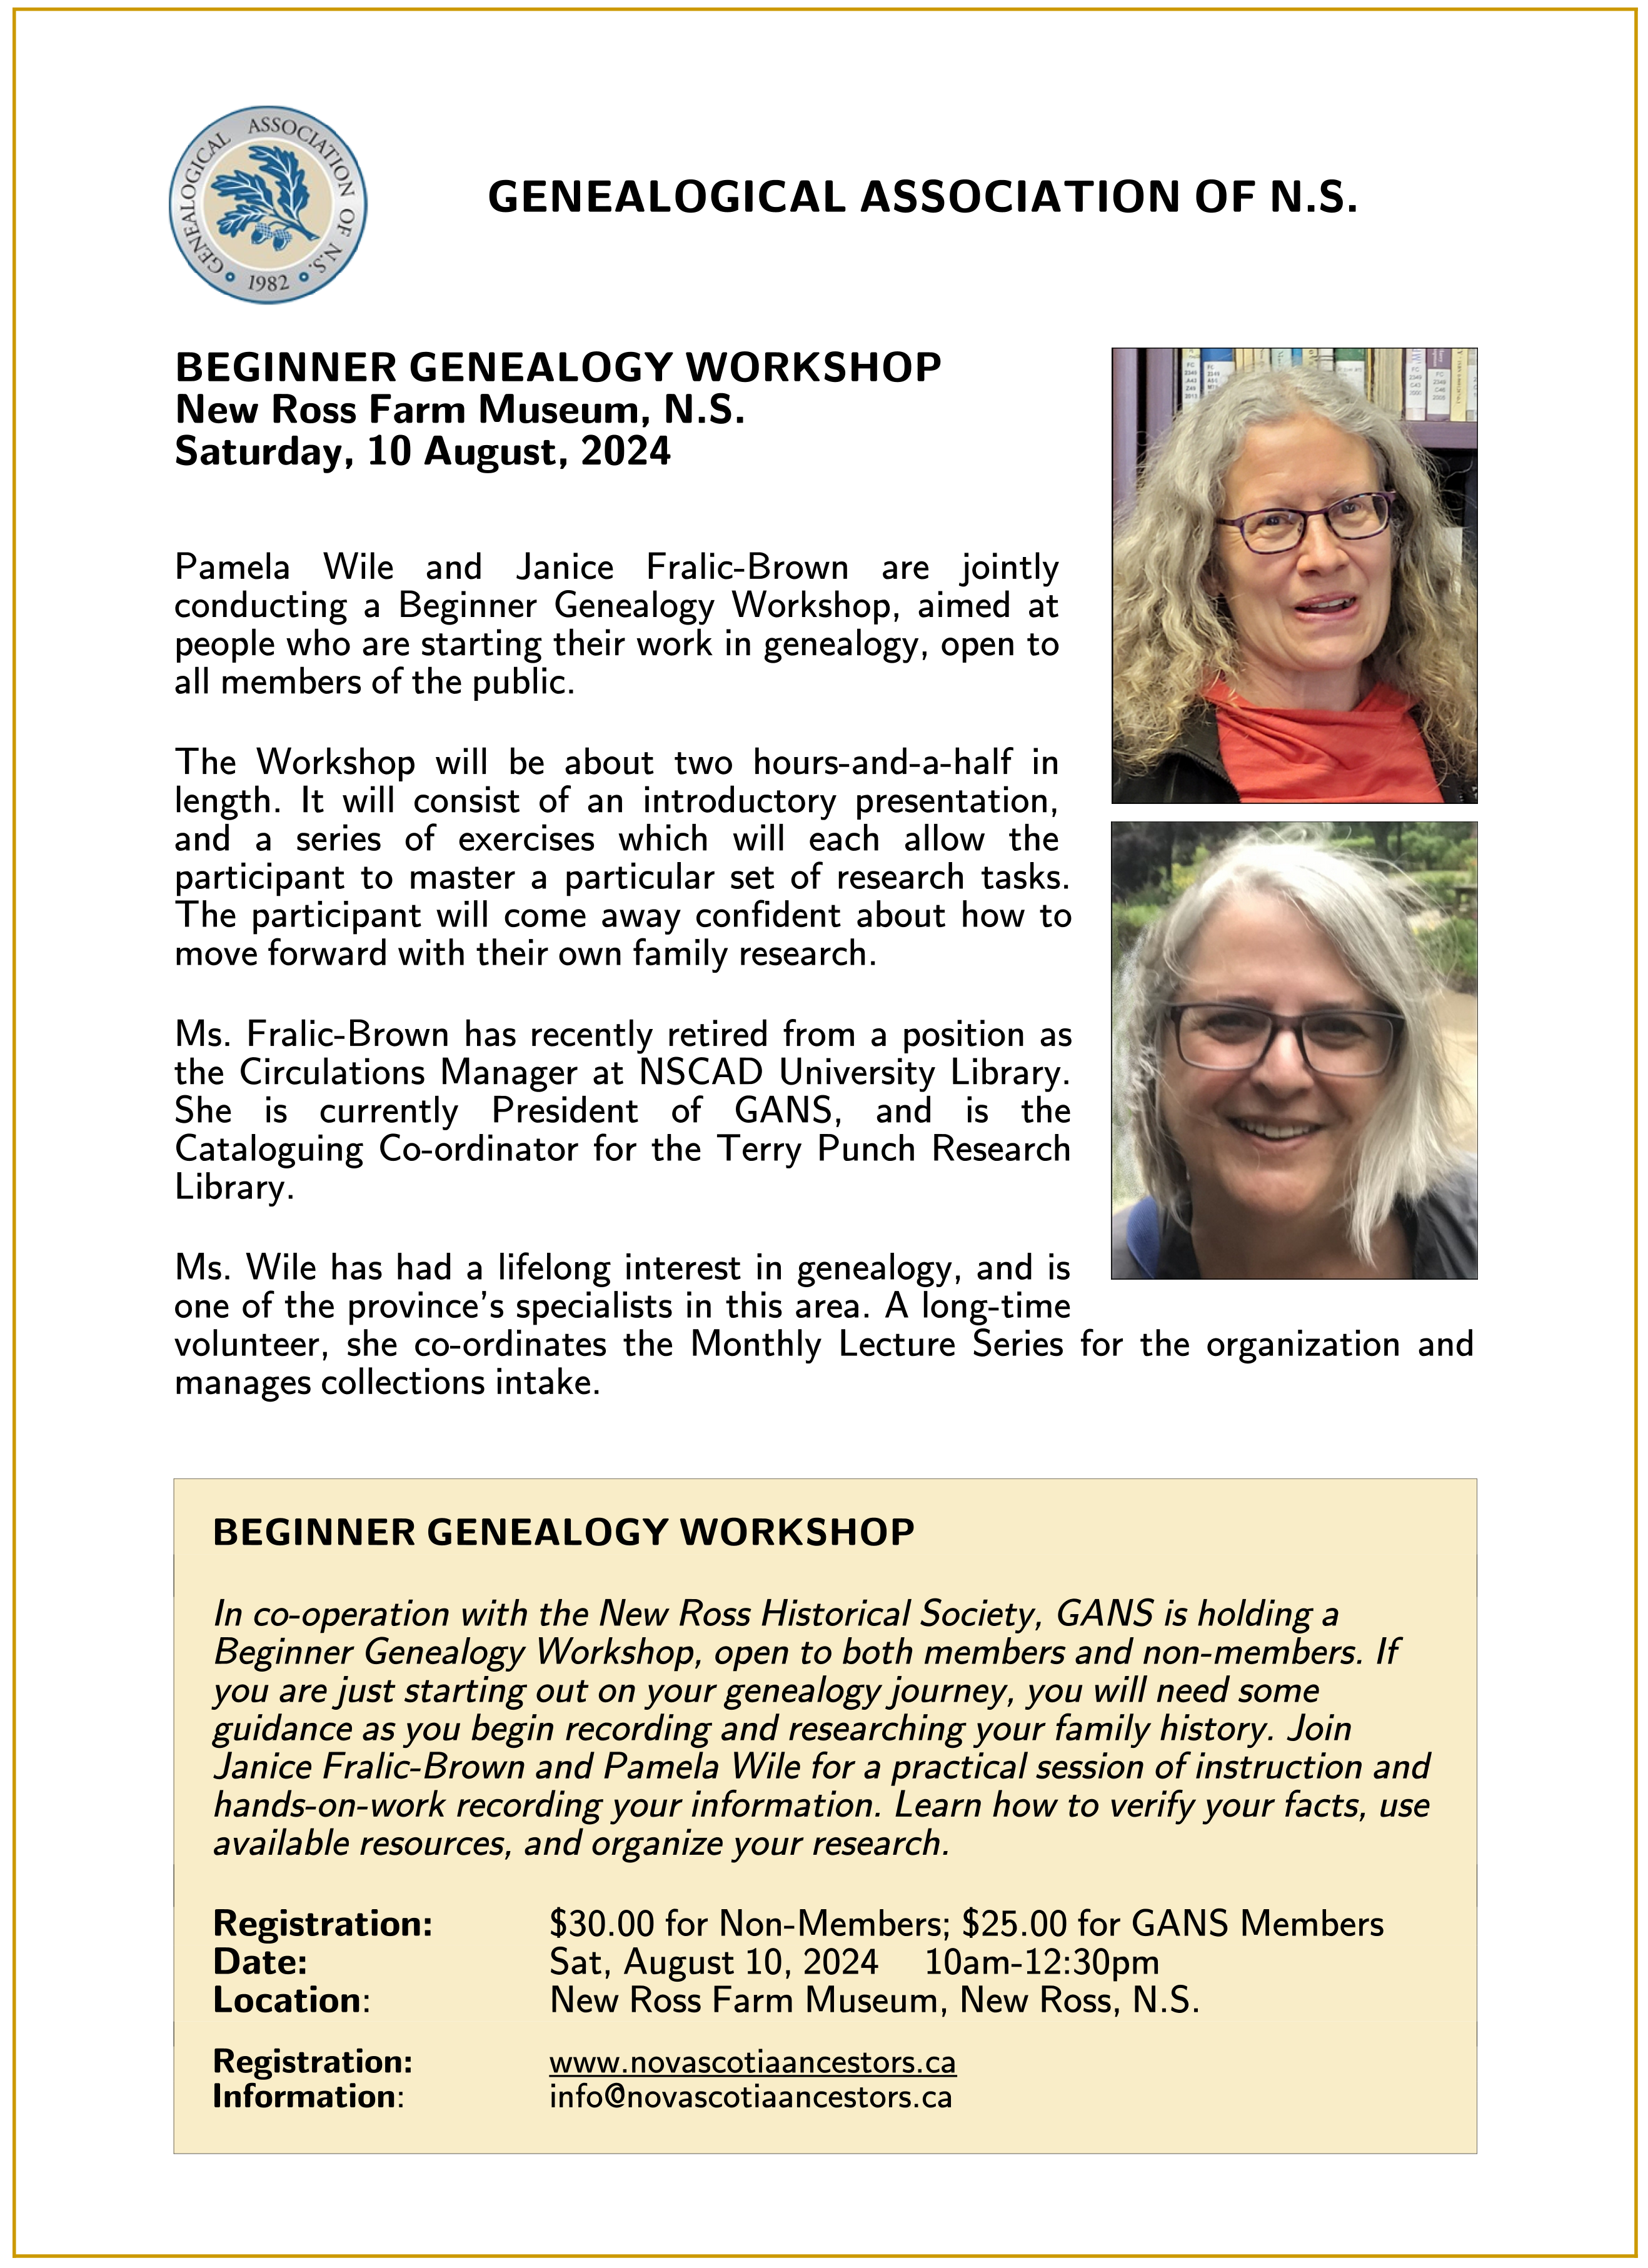 Beginner Genealogy Workshop - Aug 10, 2024